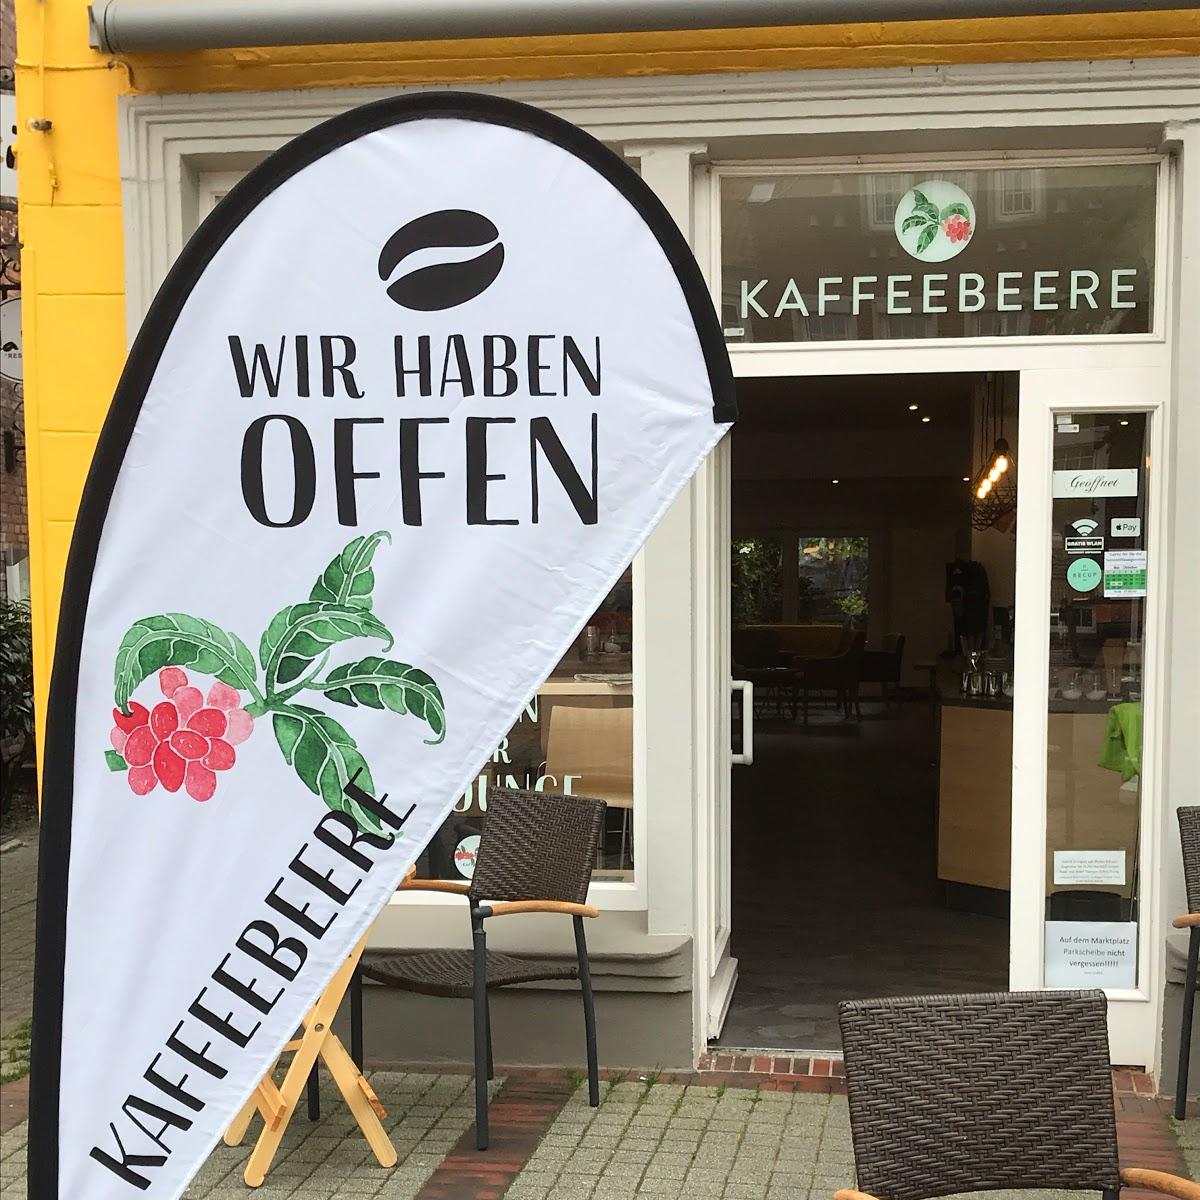 Restaurant "Kaffeebeere" in Esens